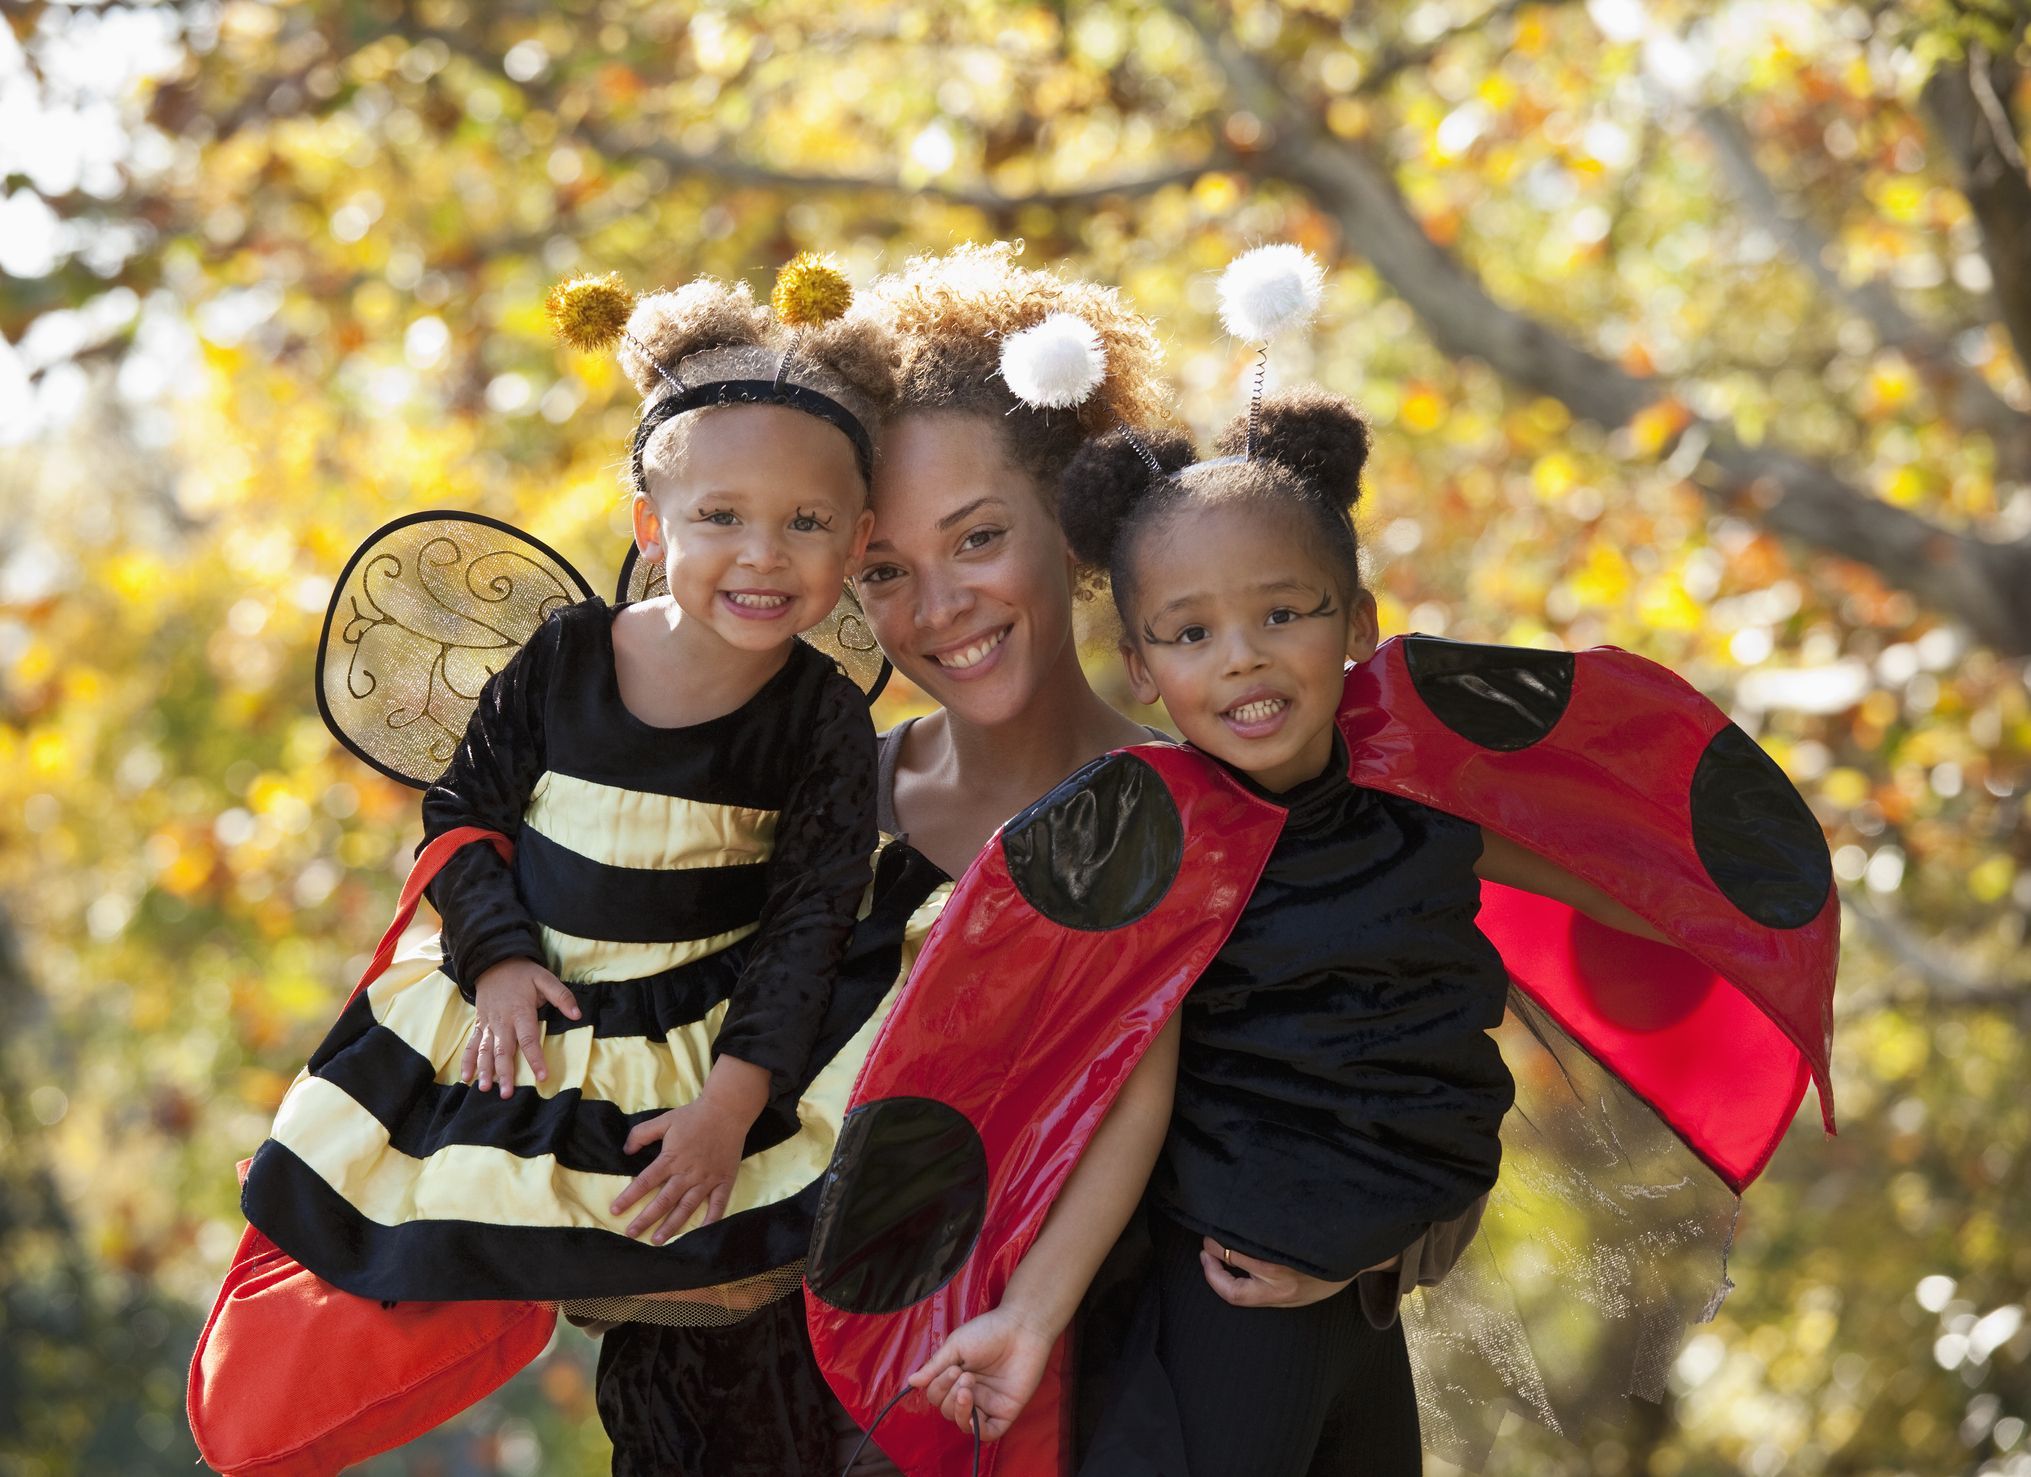 50 Best Family Halloween Costumes - Group Halloween Costume Ideas